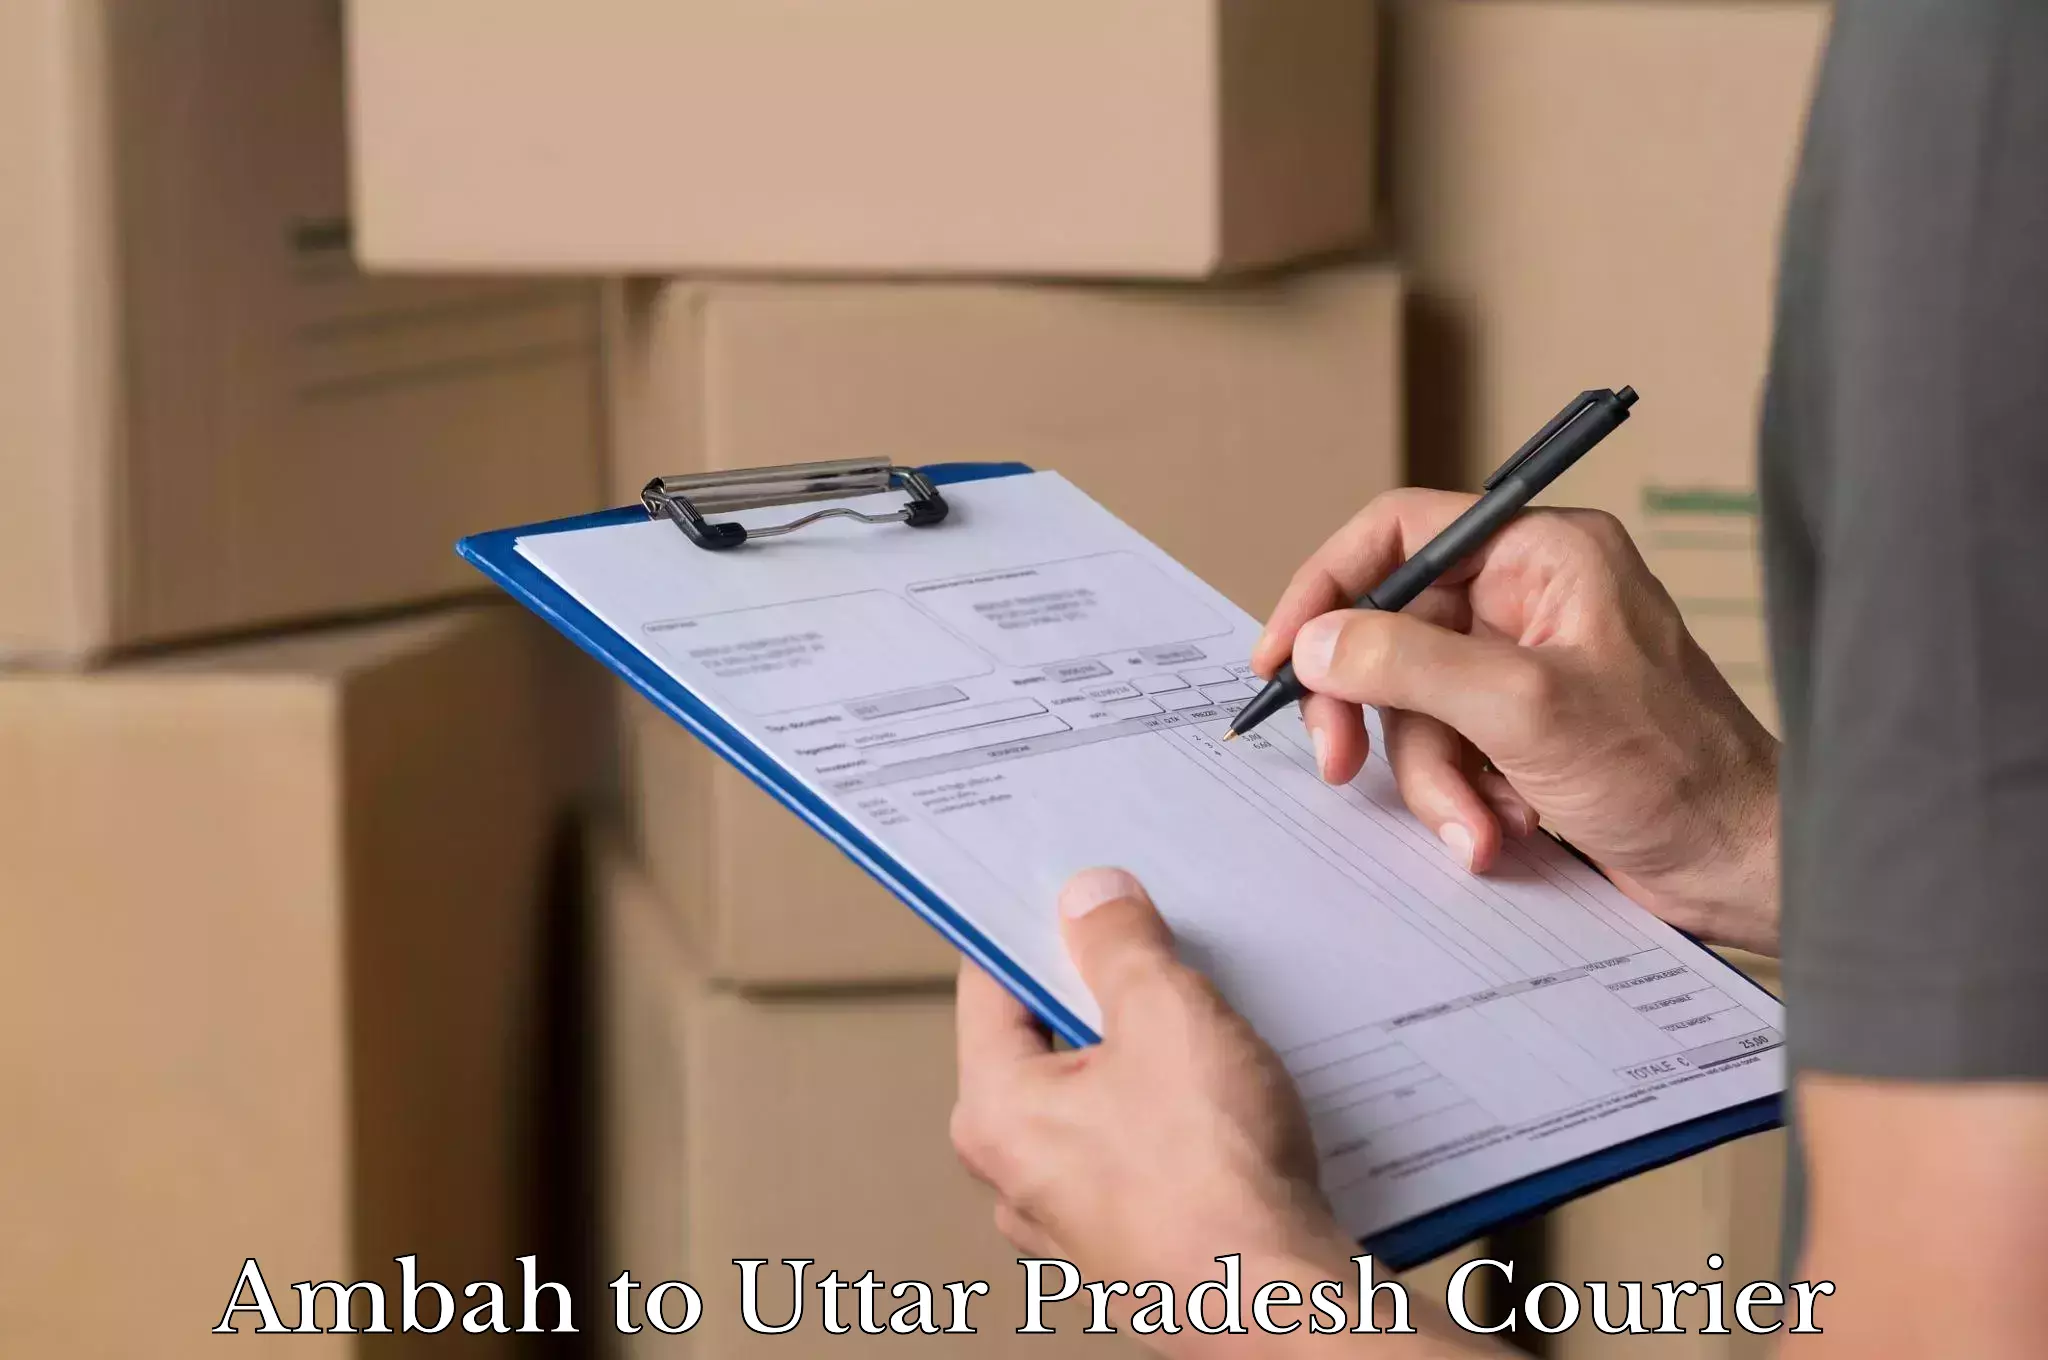 Baggage relocation service Ambah to Uttar Pradesh